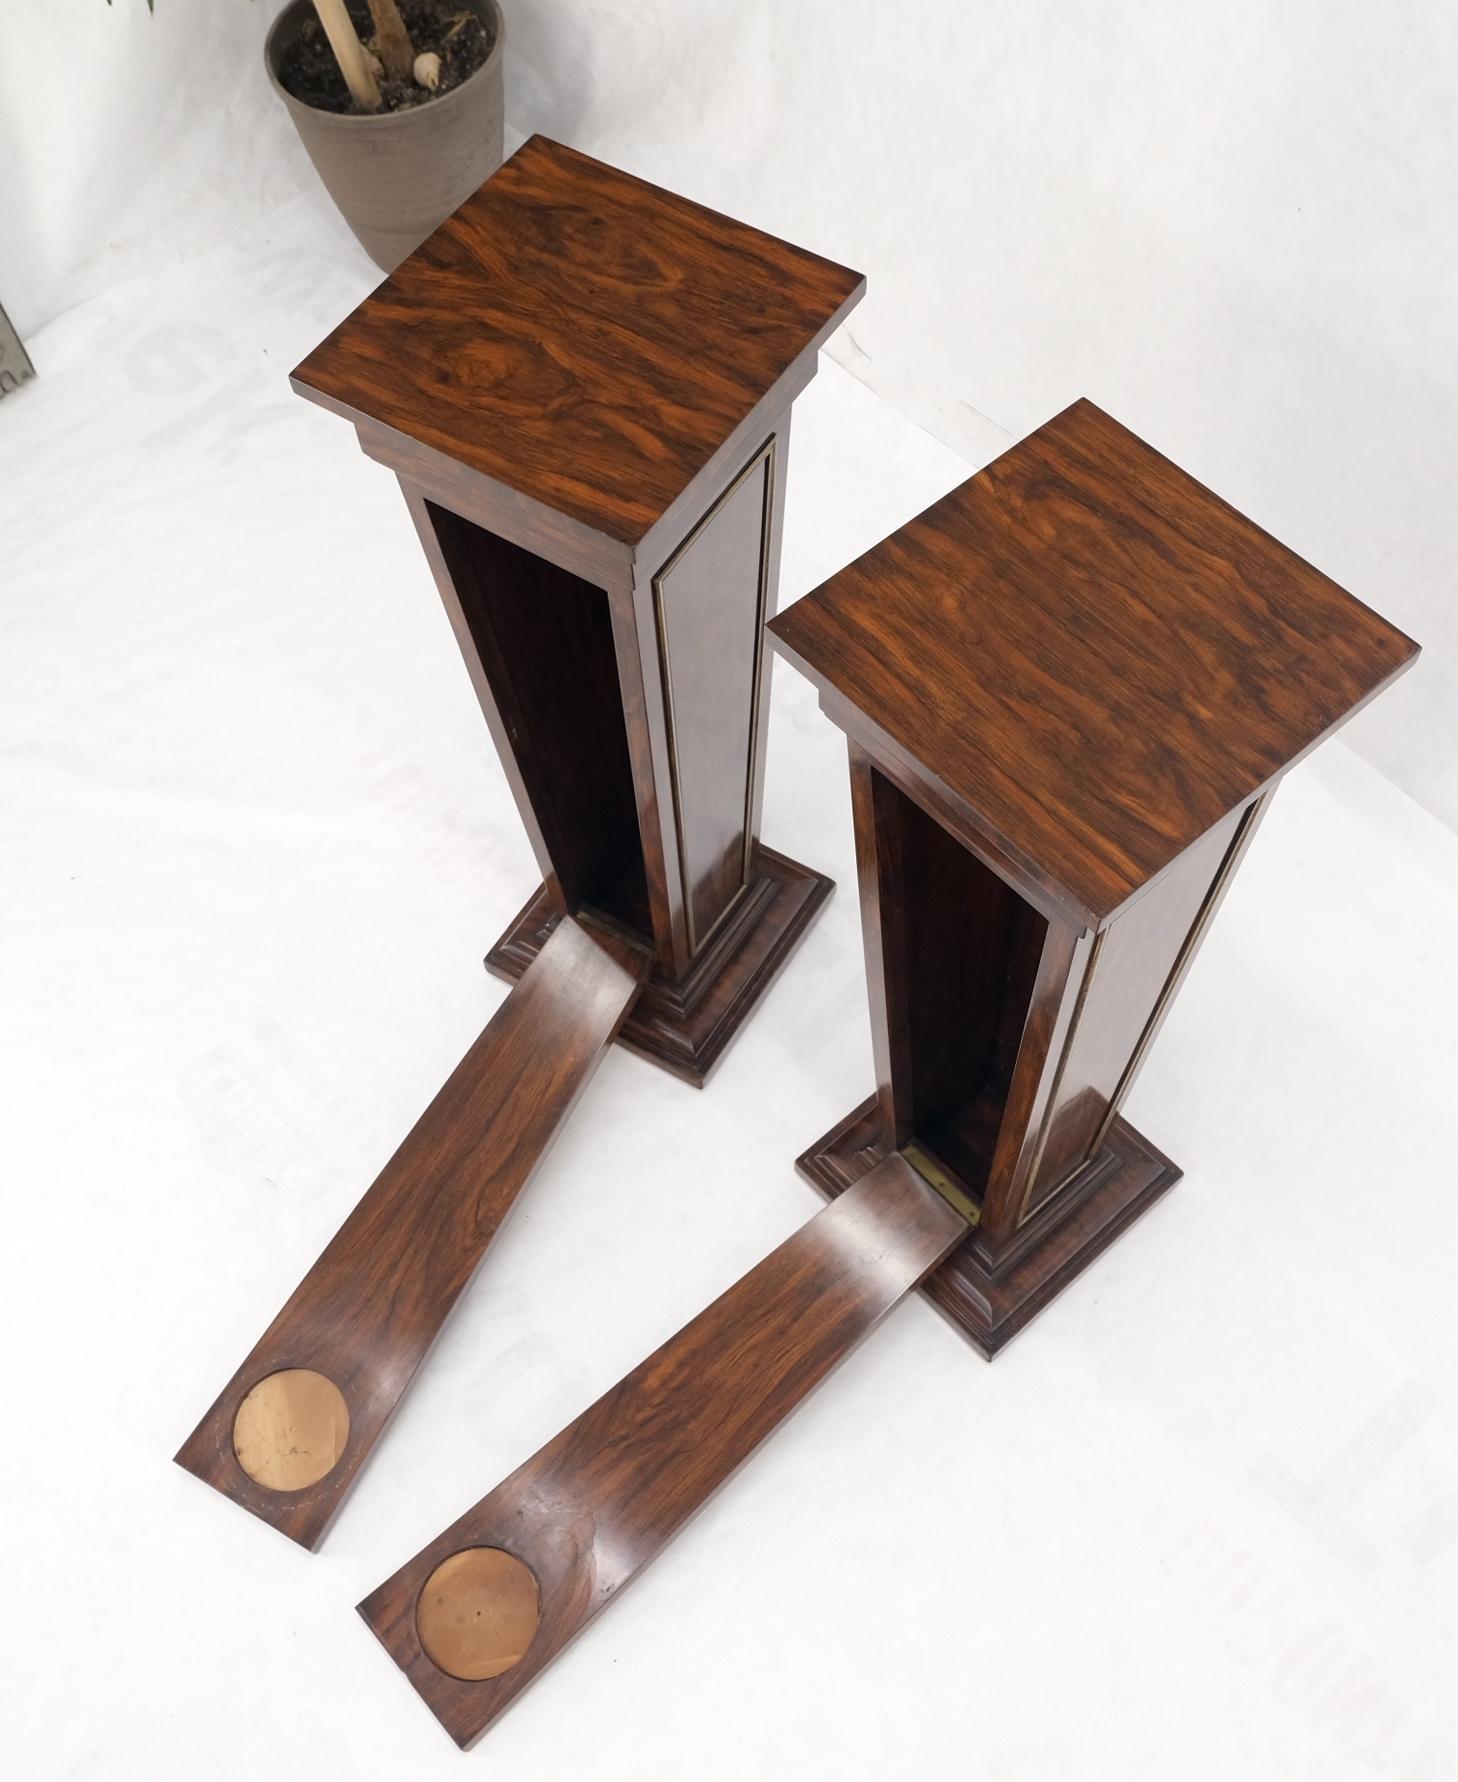 Pair of Art Deco rosewood square tapered pedestals hidden secret storage compartment mint!